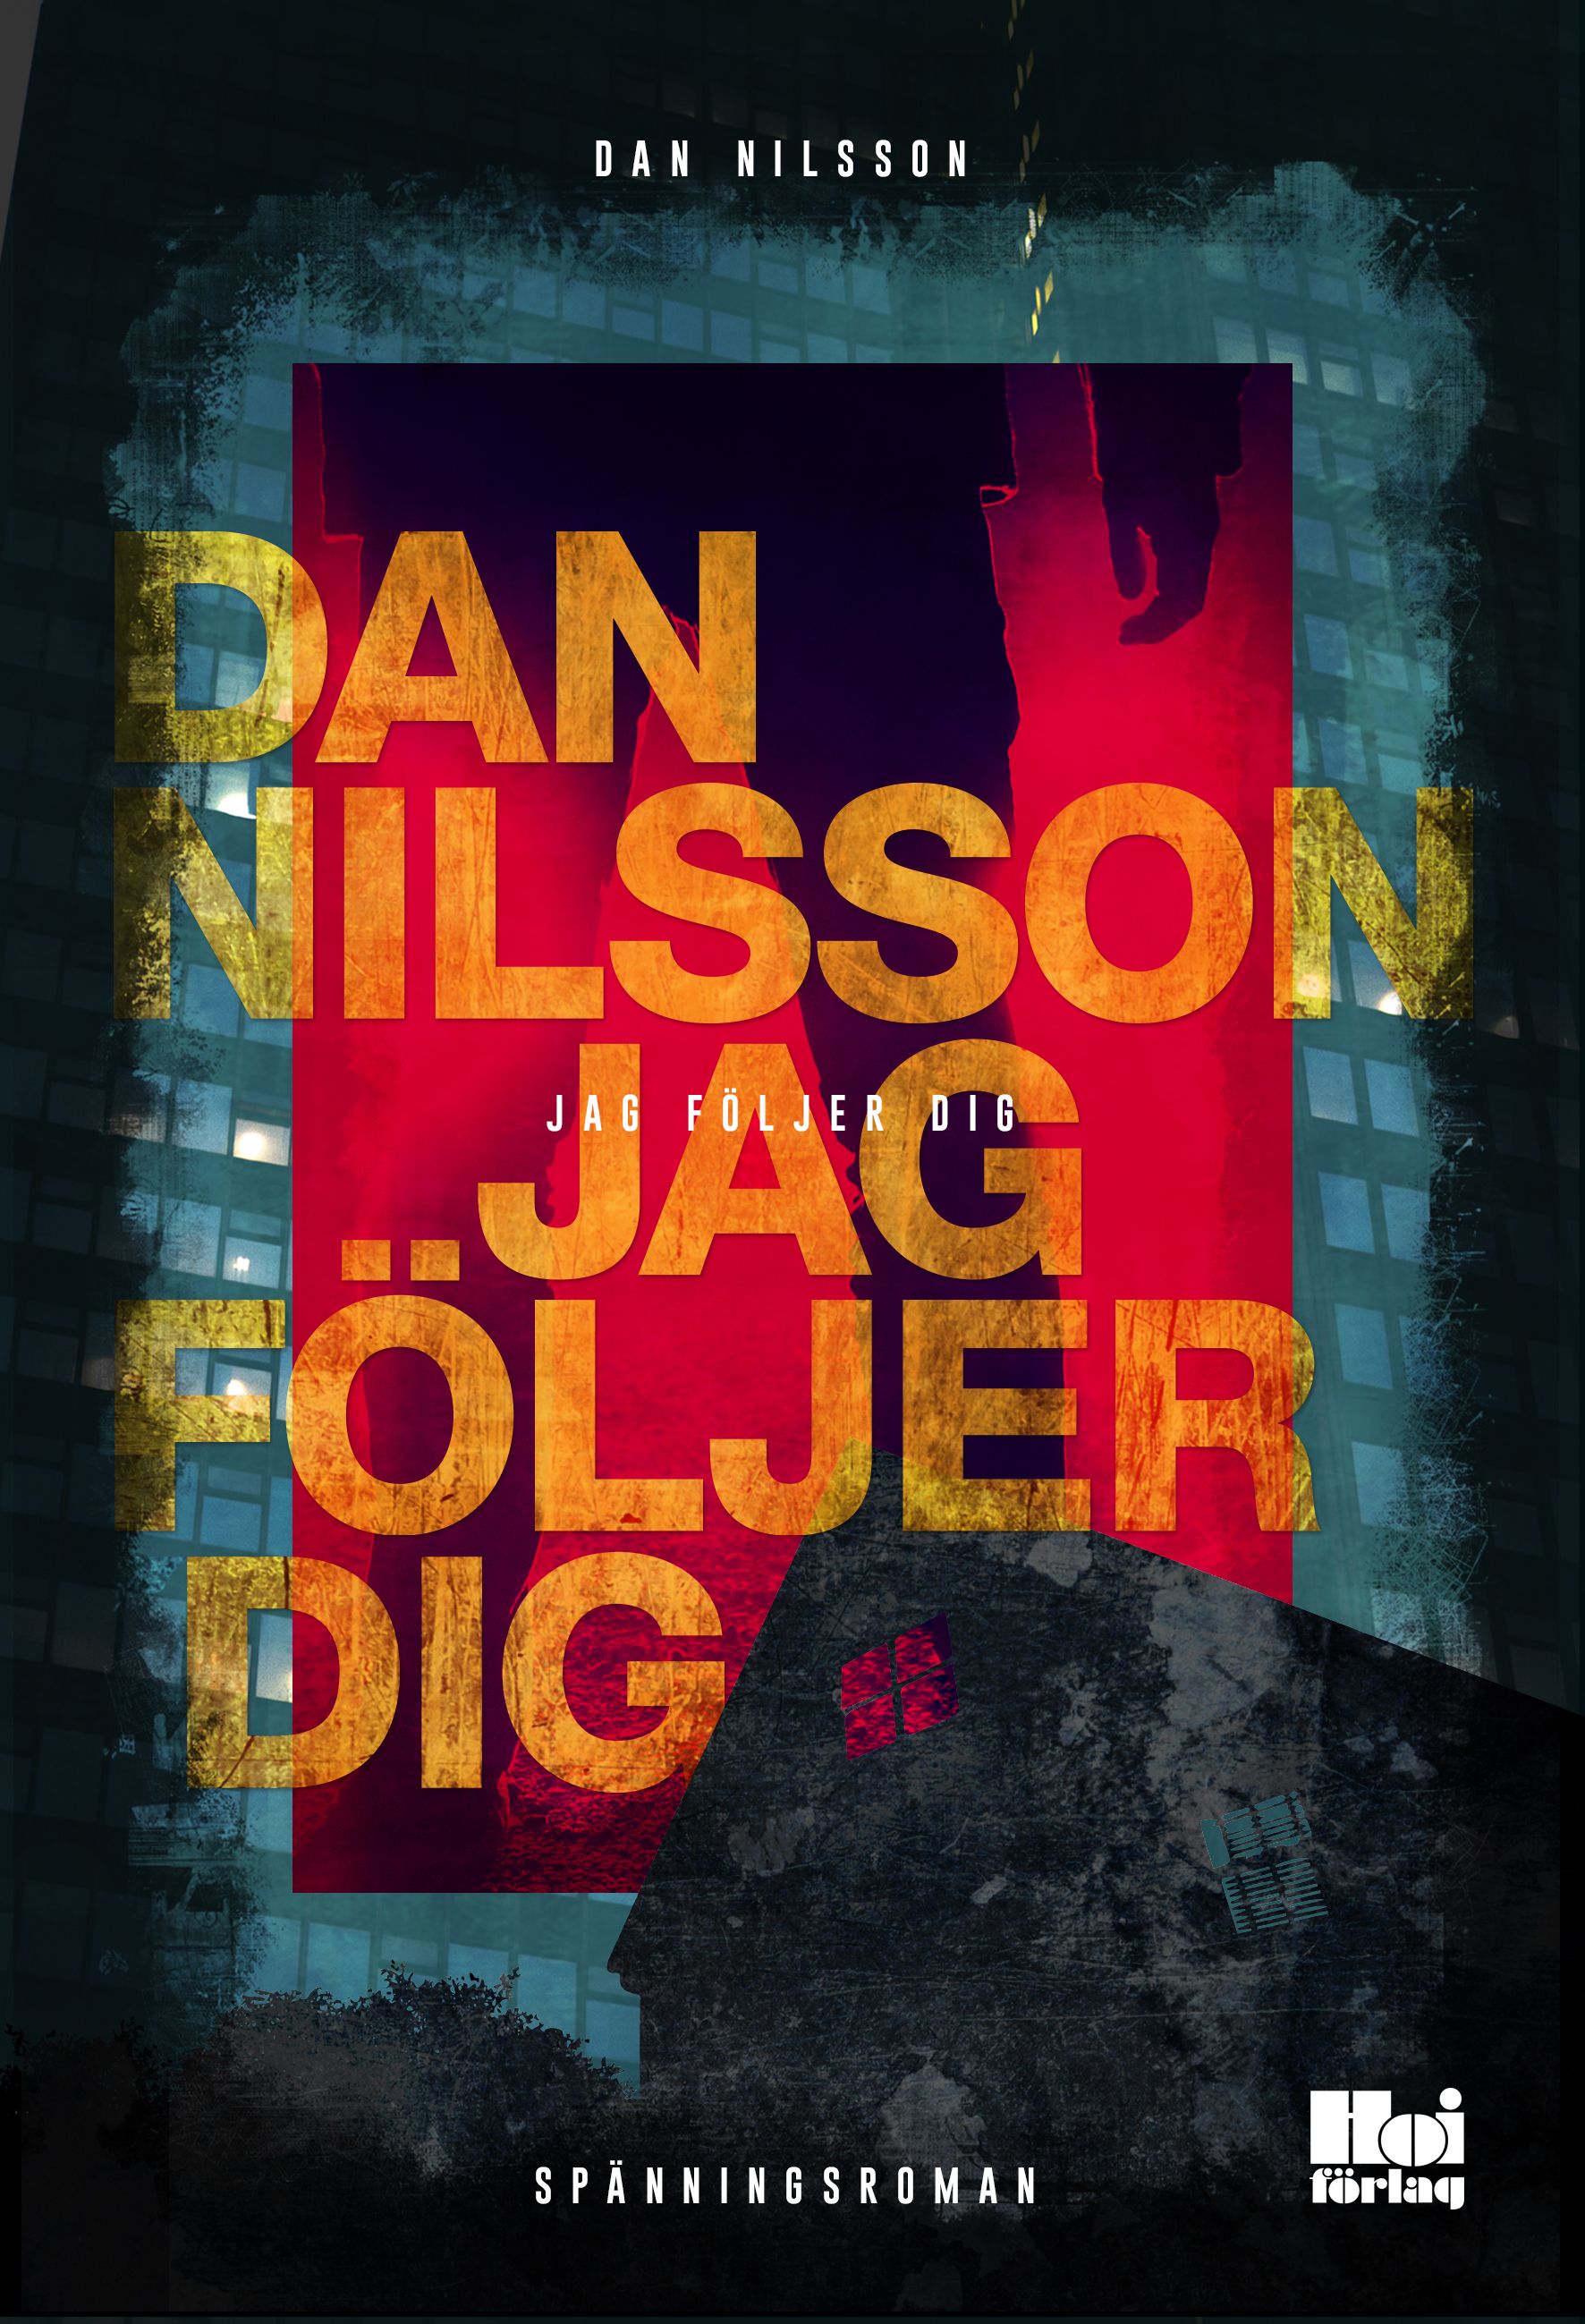 Jag följer dig, e-bog af Dan Nilsson